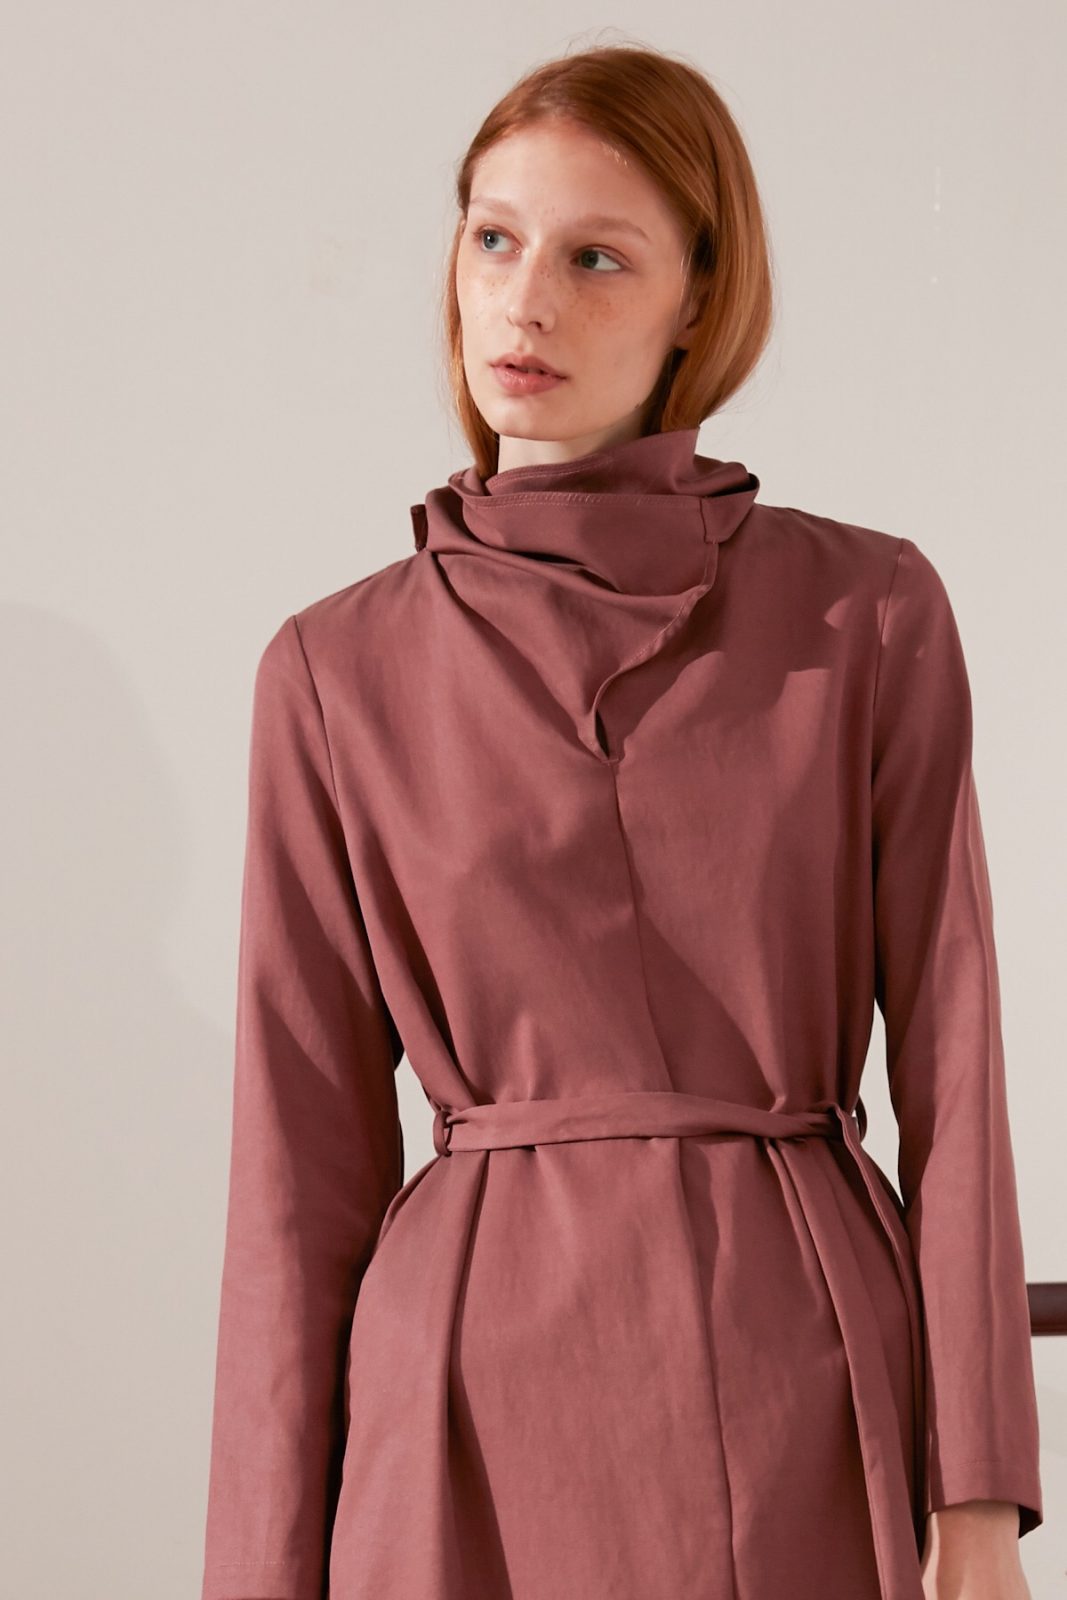 SKYE modern minimalist women fashion long sleeve asymmetrical high collar dress maroon 3